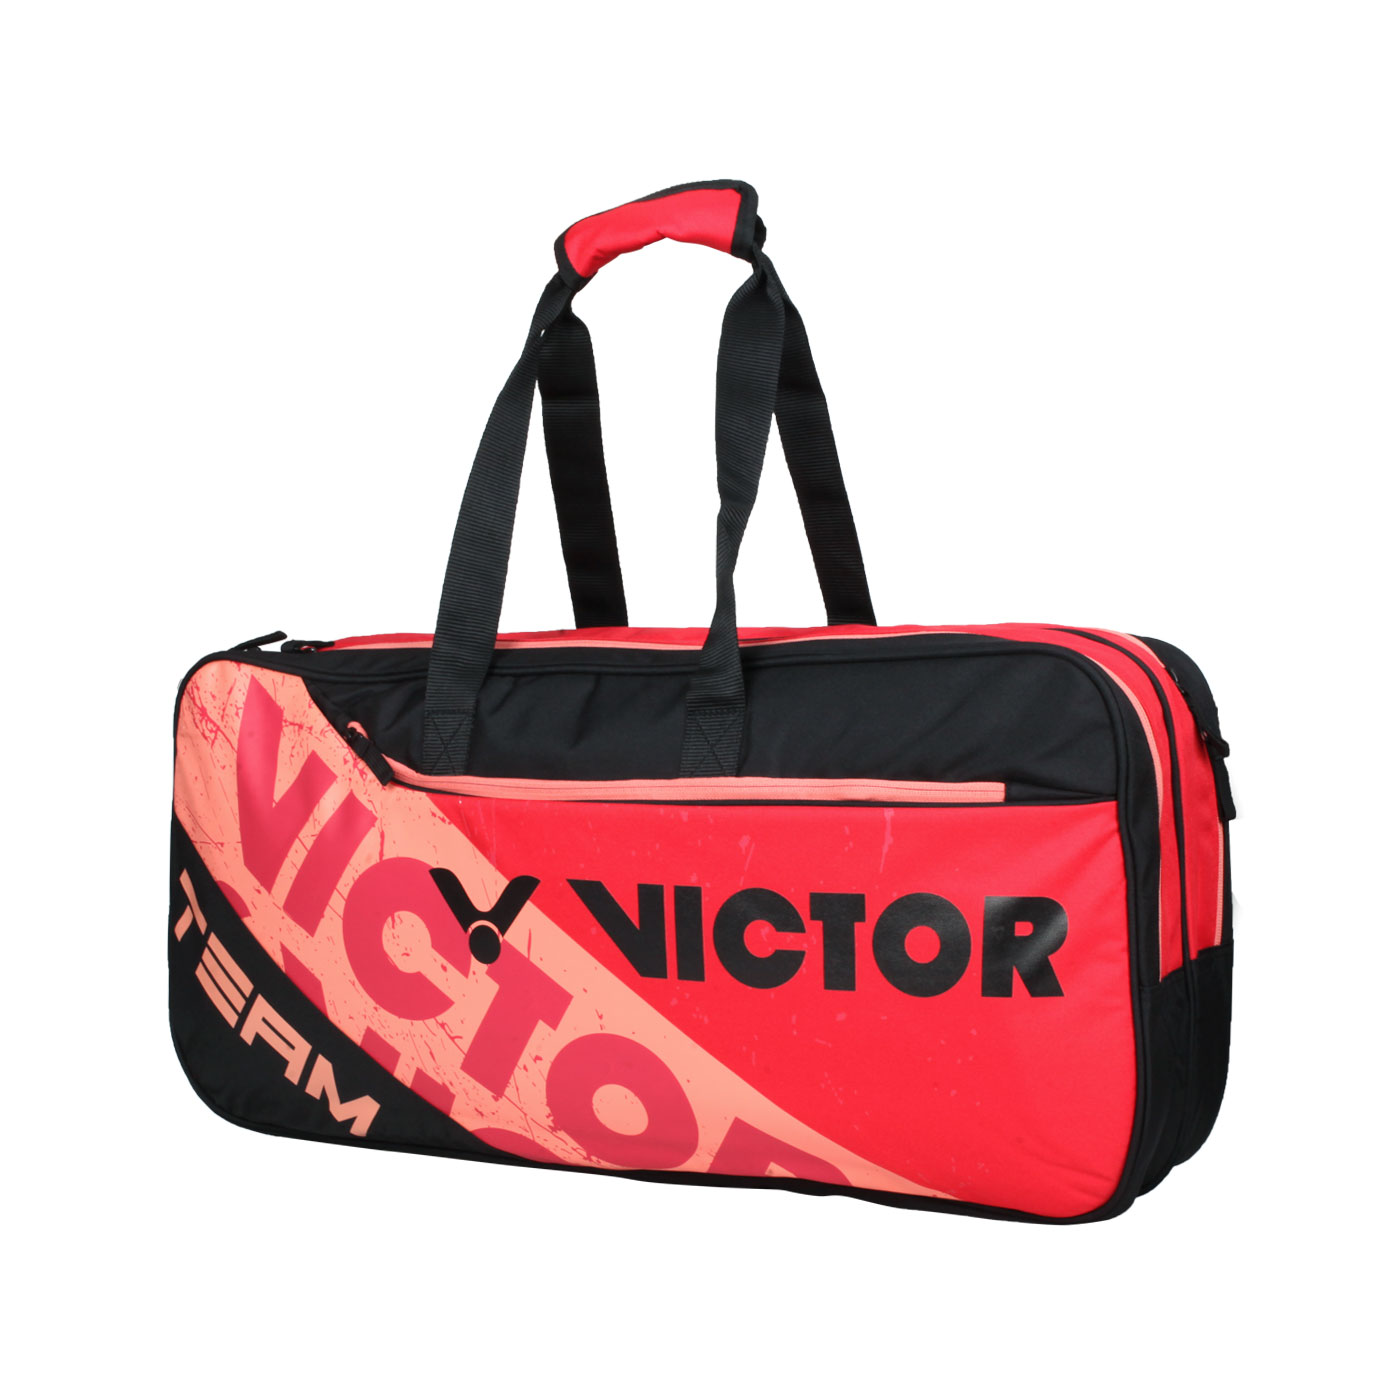 VICTOR 6支裝矩形包 BR6615DC - 橘紅黑